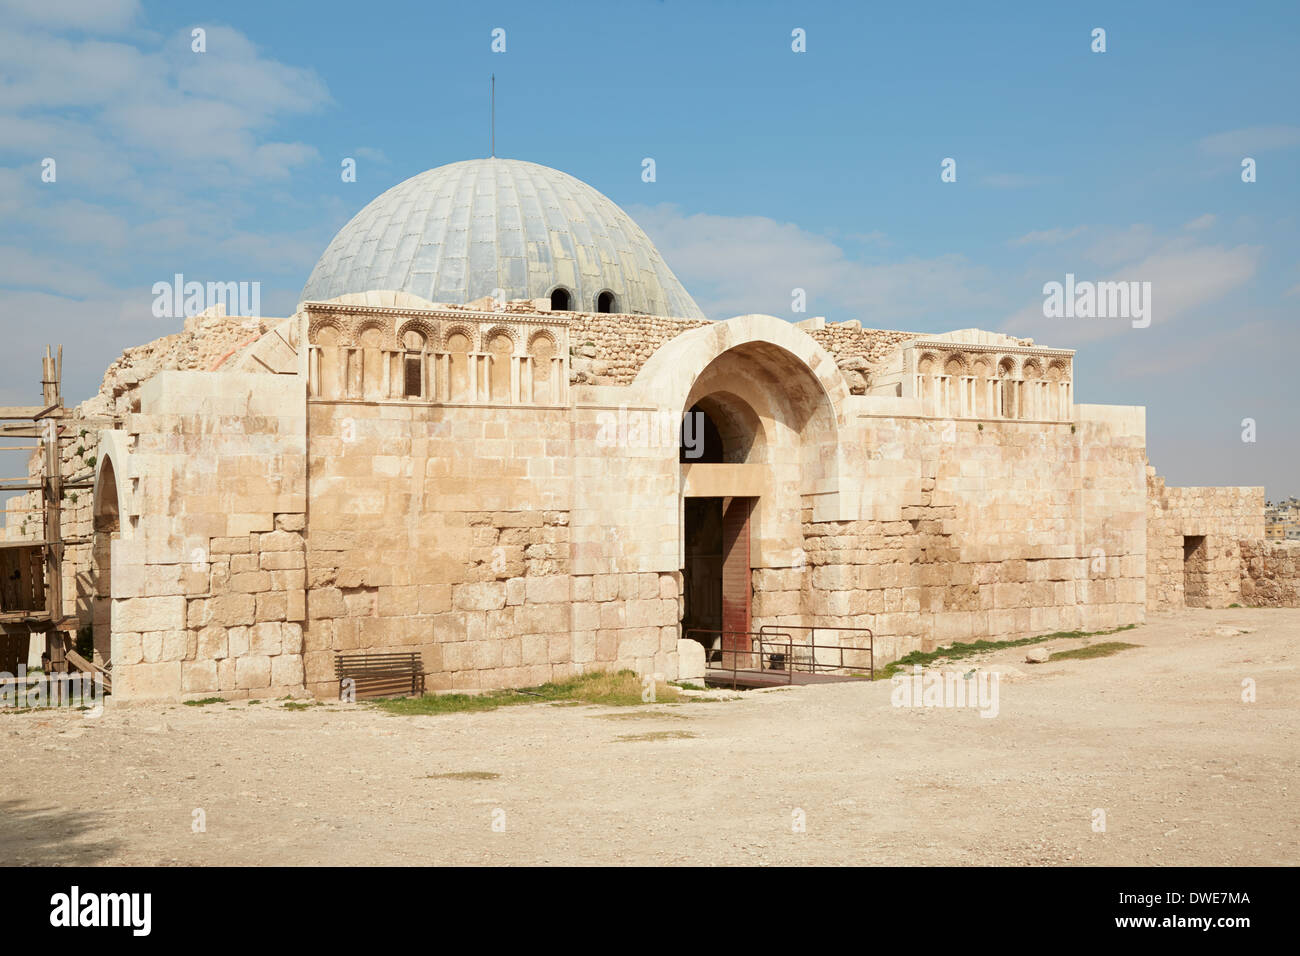 The Umayyad Palace at Jabal al-Qal'a, the old roman citadel in Amman, Jordan Stock Photo